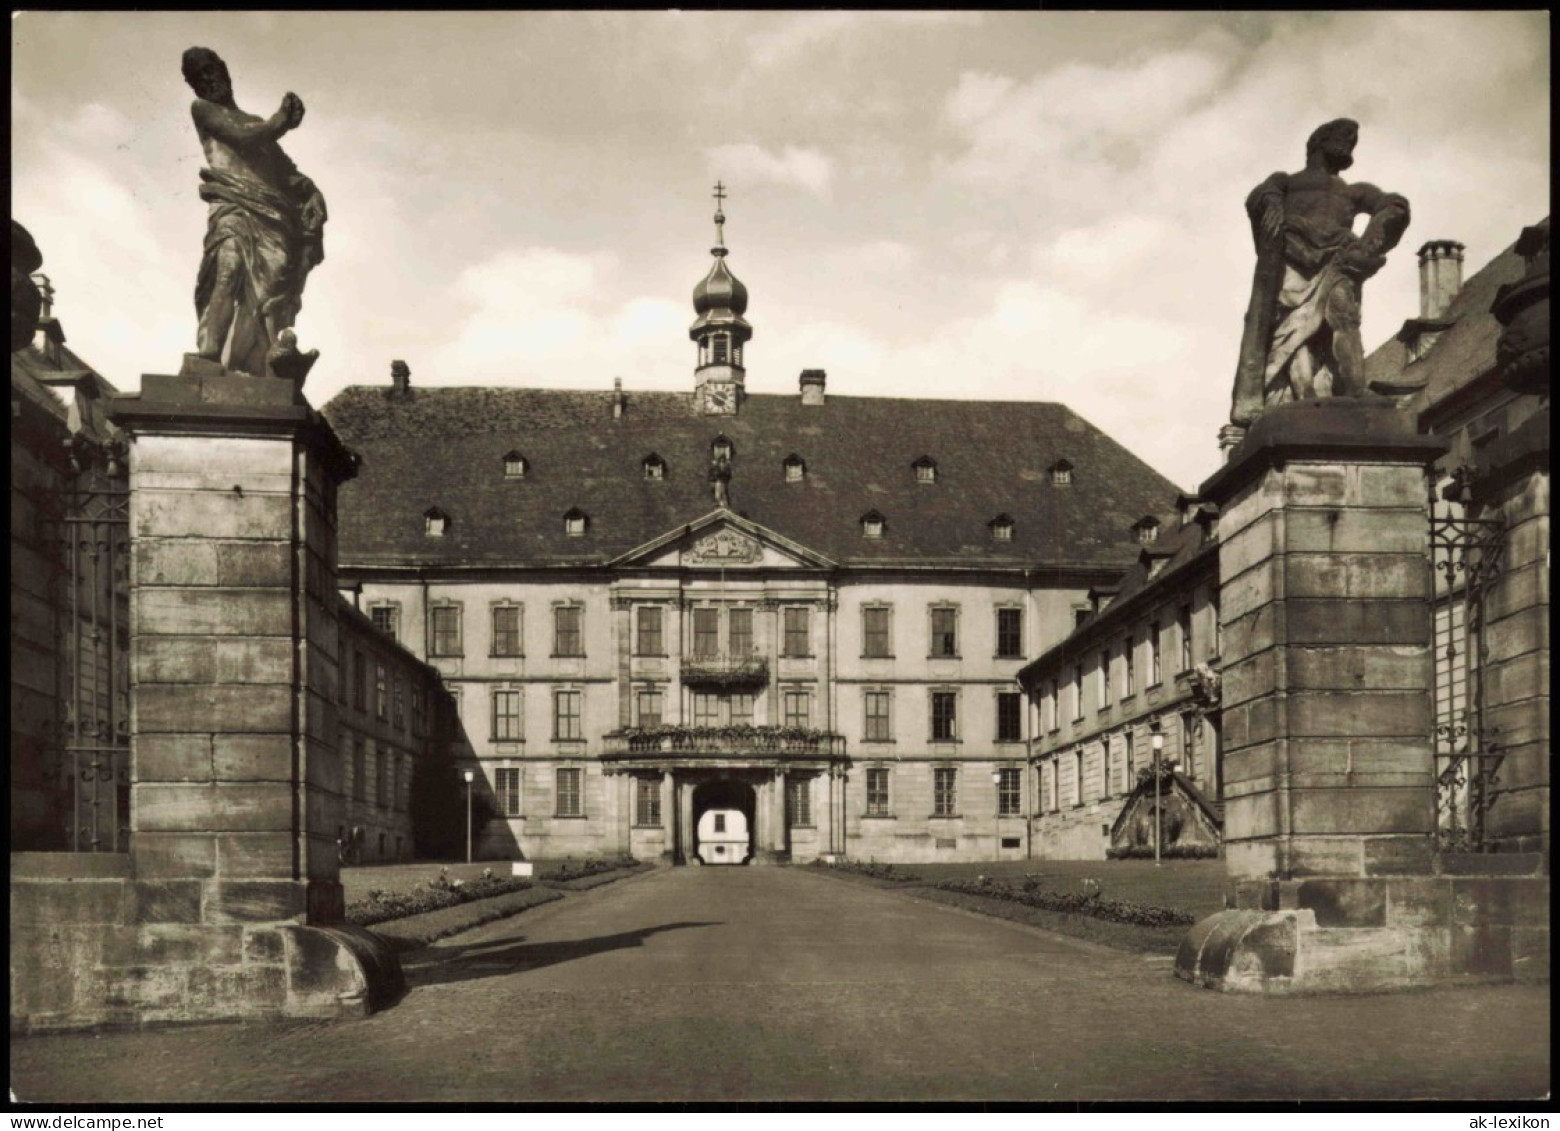 Ansichtskarte Fulda Fuldaer Stadtschloss (Eingang) 1960 - Fulda